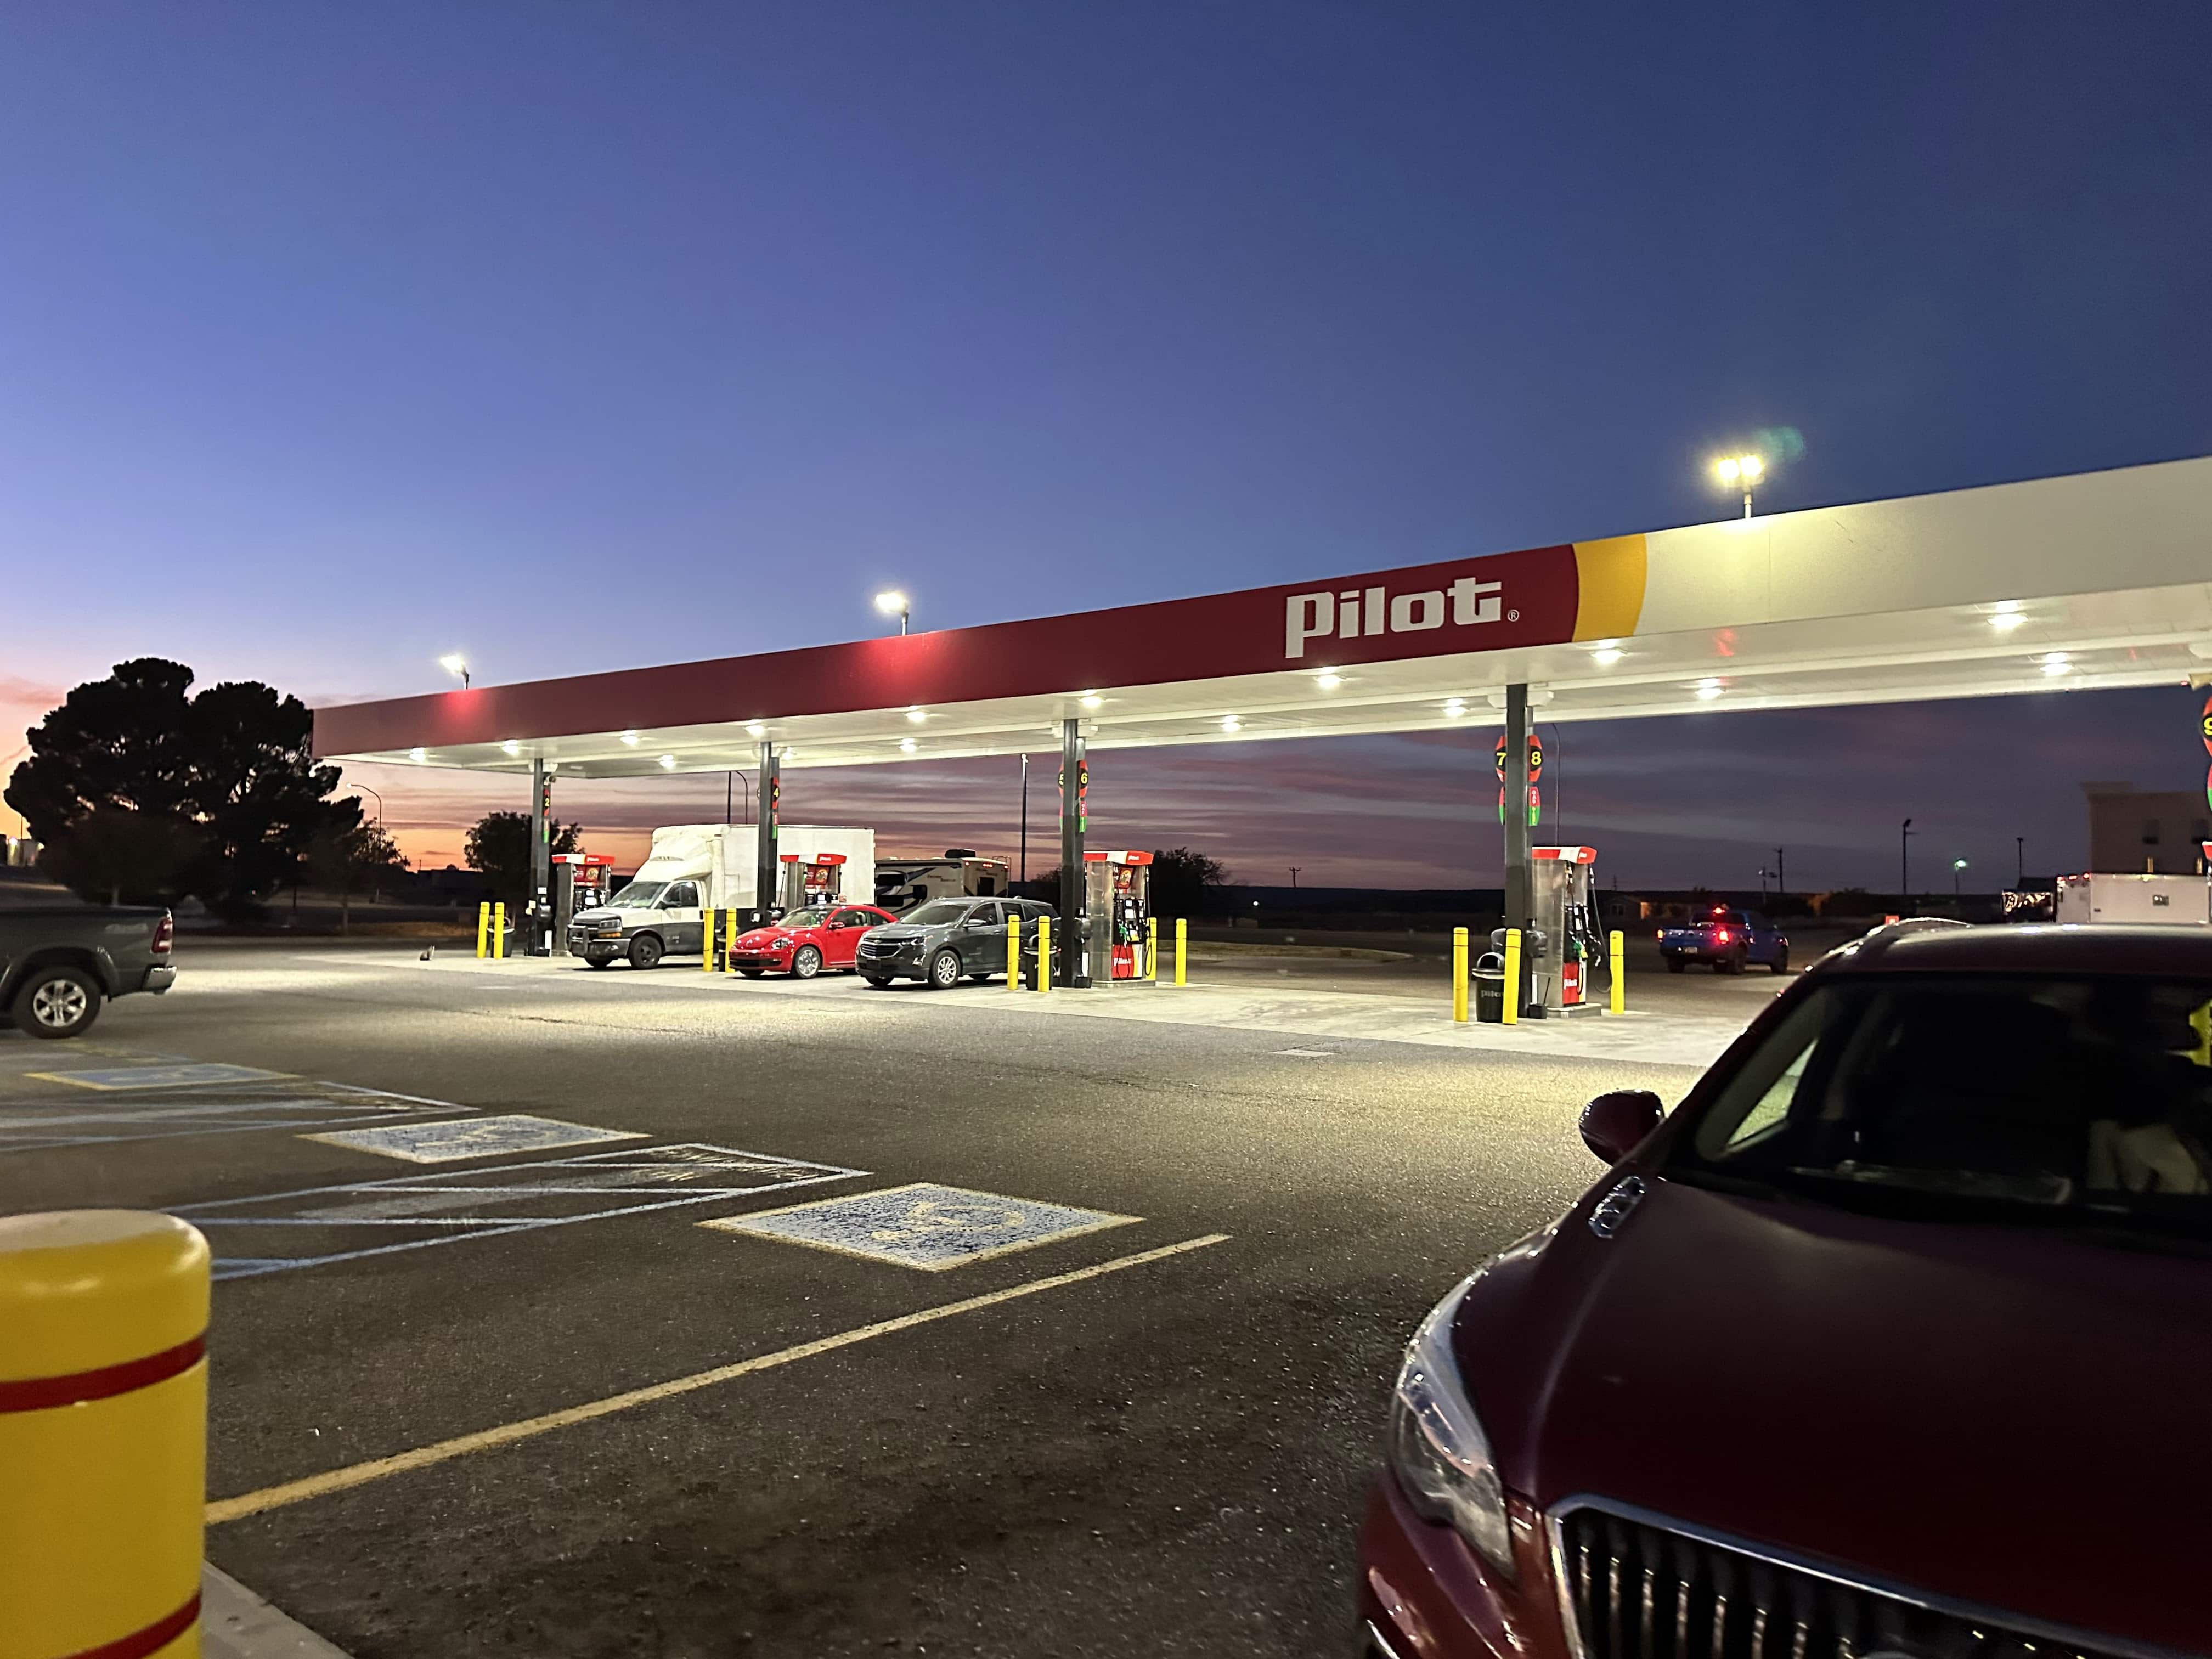 Pilot Travel Center - Santa Rosa, US, closest truck stop